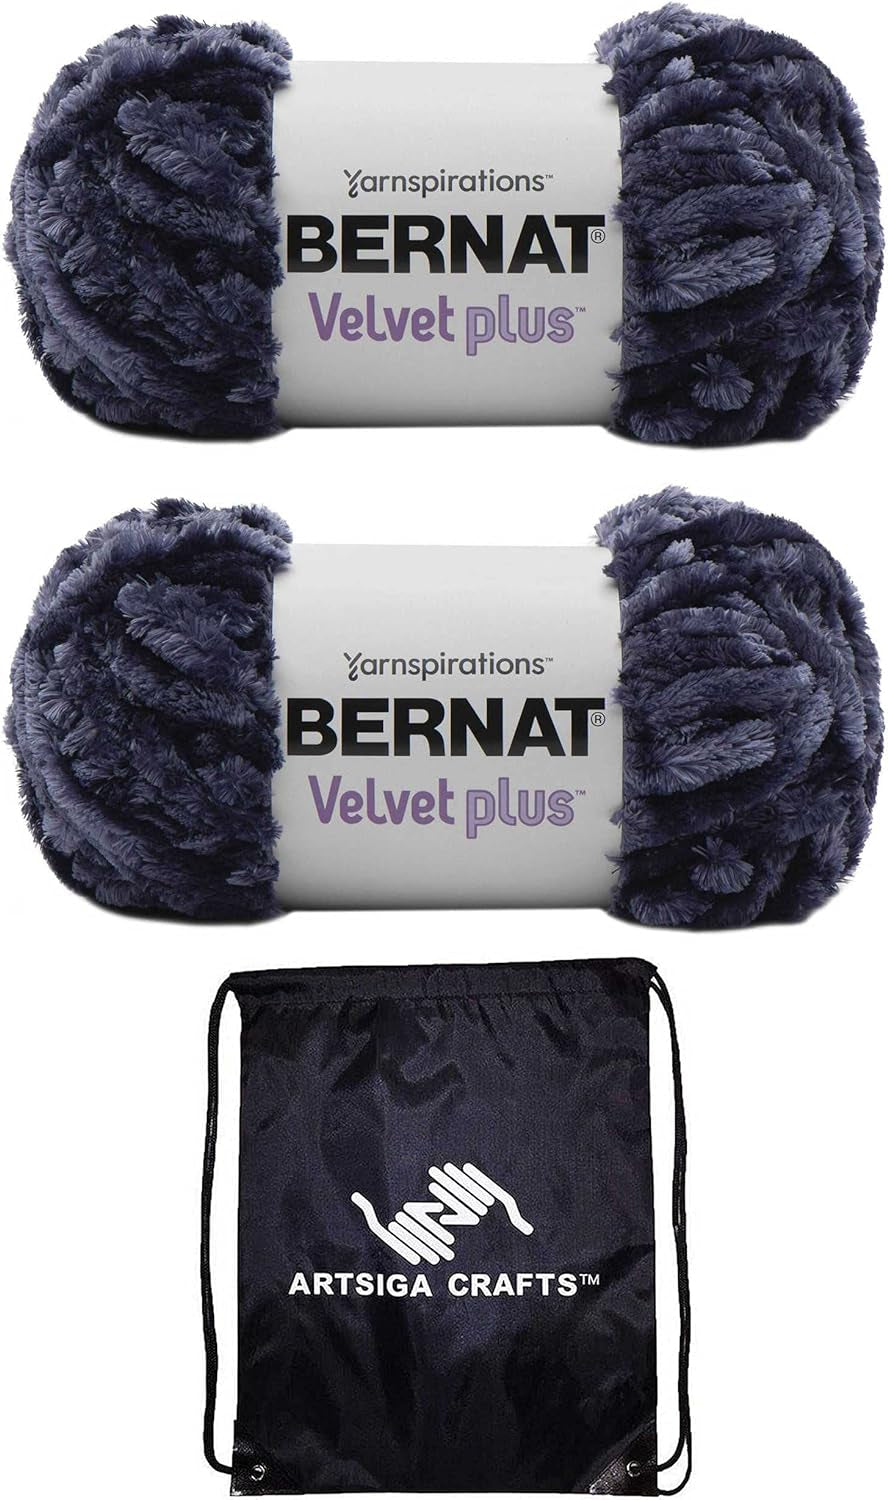 Bernat Velvet plus Indigo Velvet 161256-56008 (2-Skeins - Same Dye Lot) Weight S Bulky #6 Polyester Yarn for Crocheting and Knitting - Bundle with 1 Artsiga Crafts Project Bag